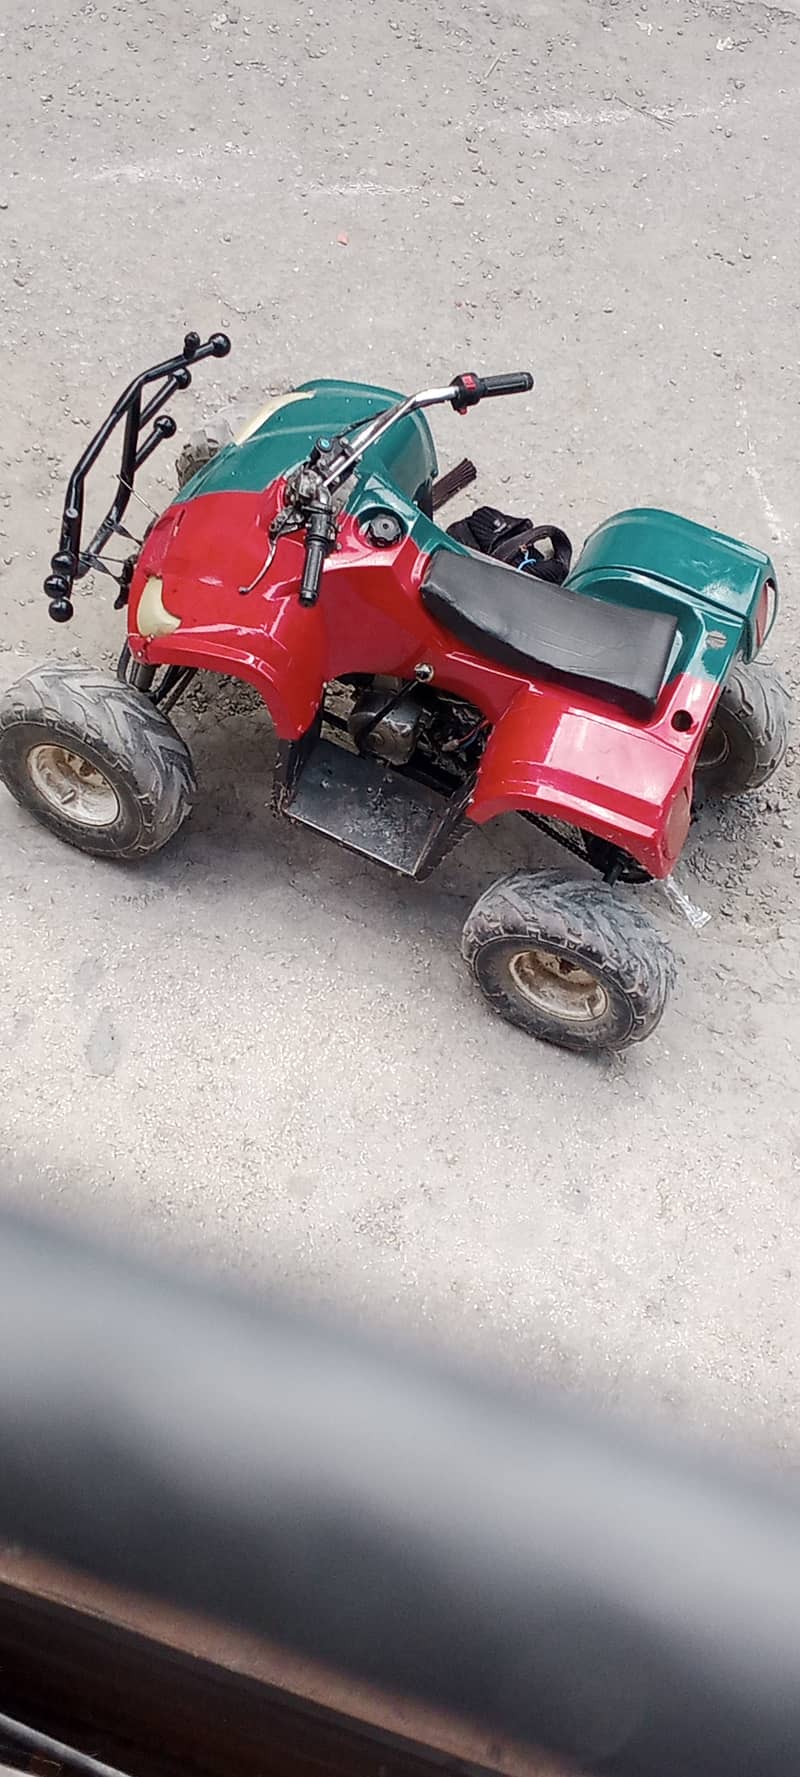 ATV quad for sale in good condition 0